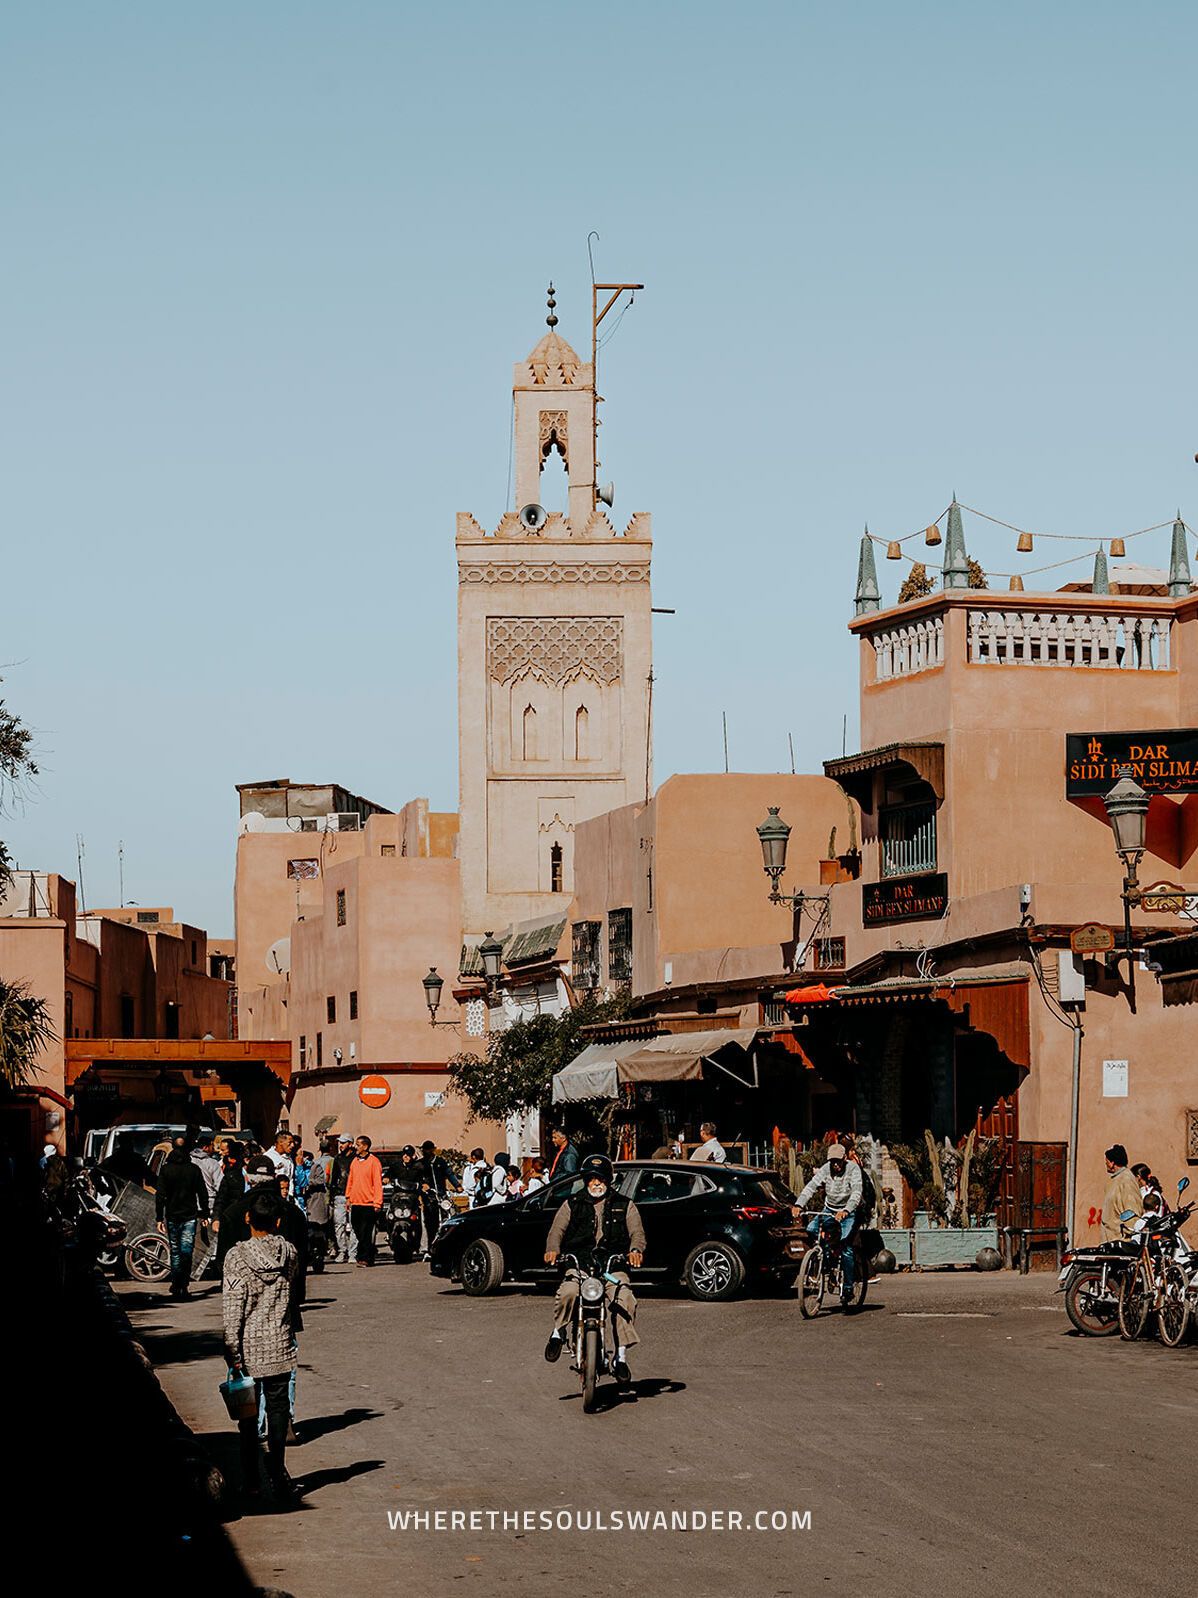 Purchasing a sim card in Morocco